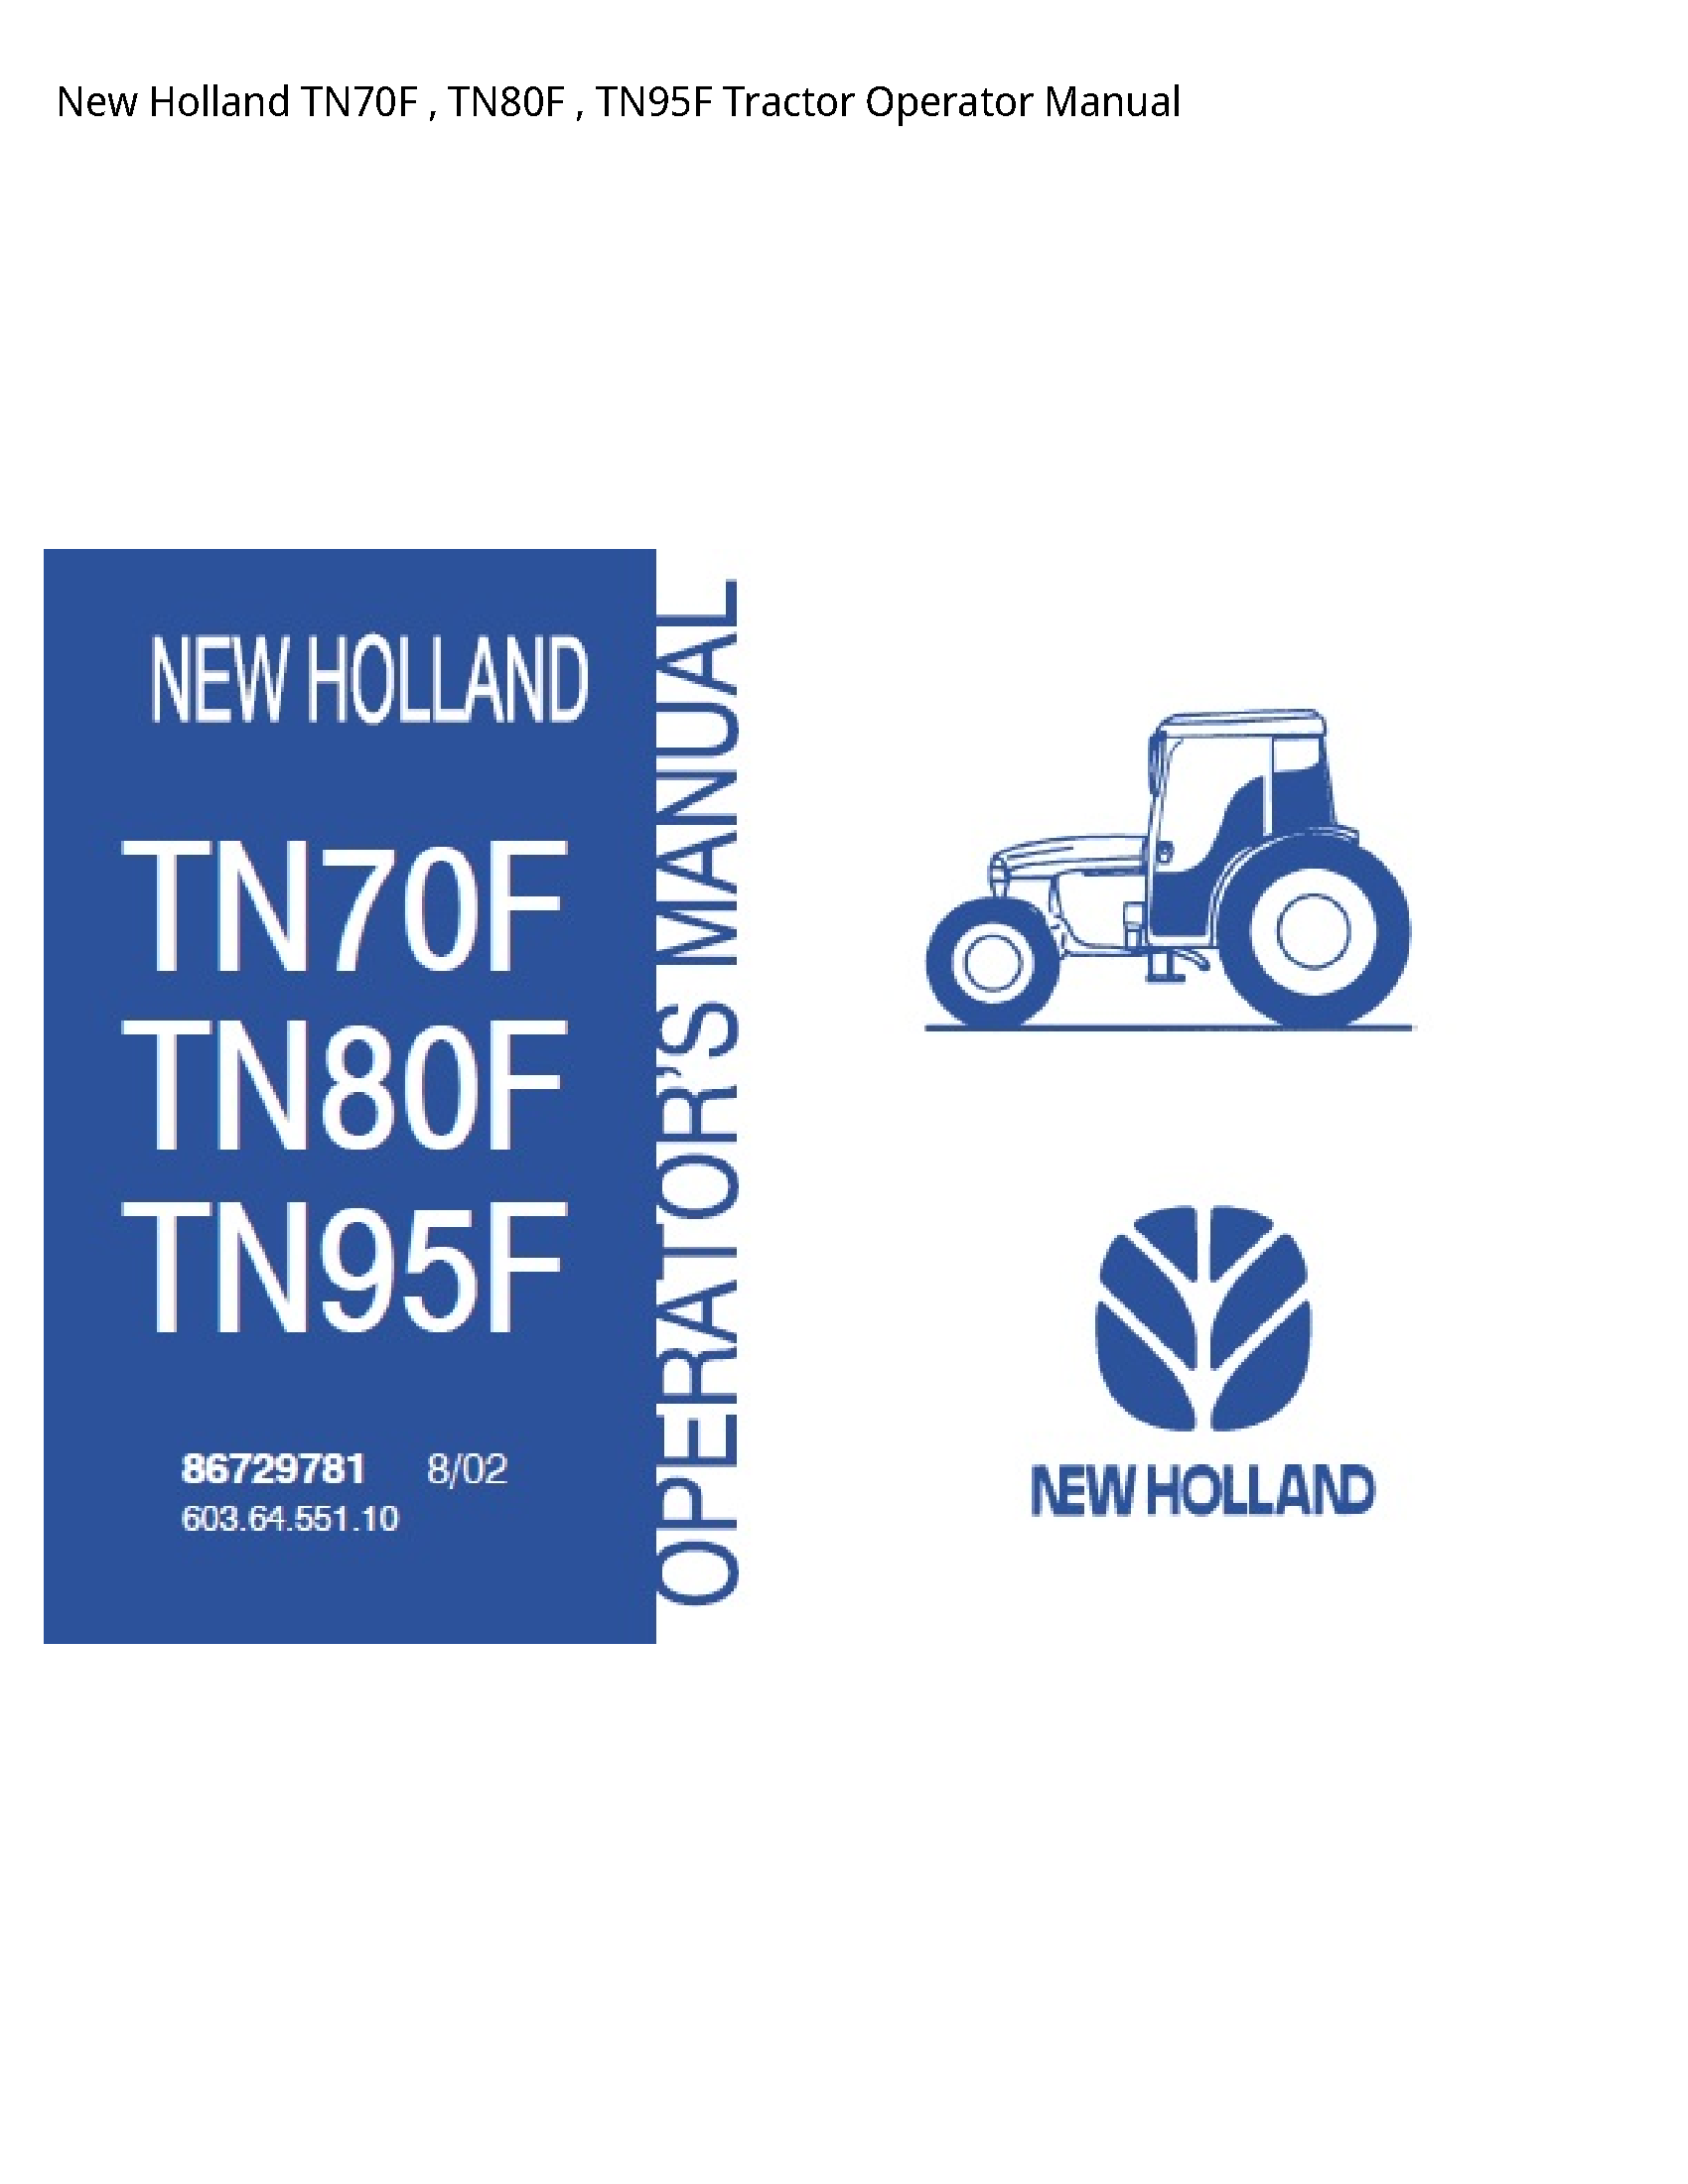 New Holland TN70F Tractor Operator manual